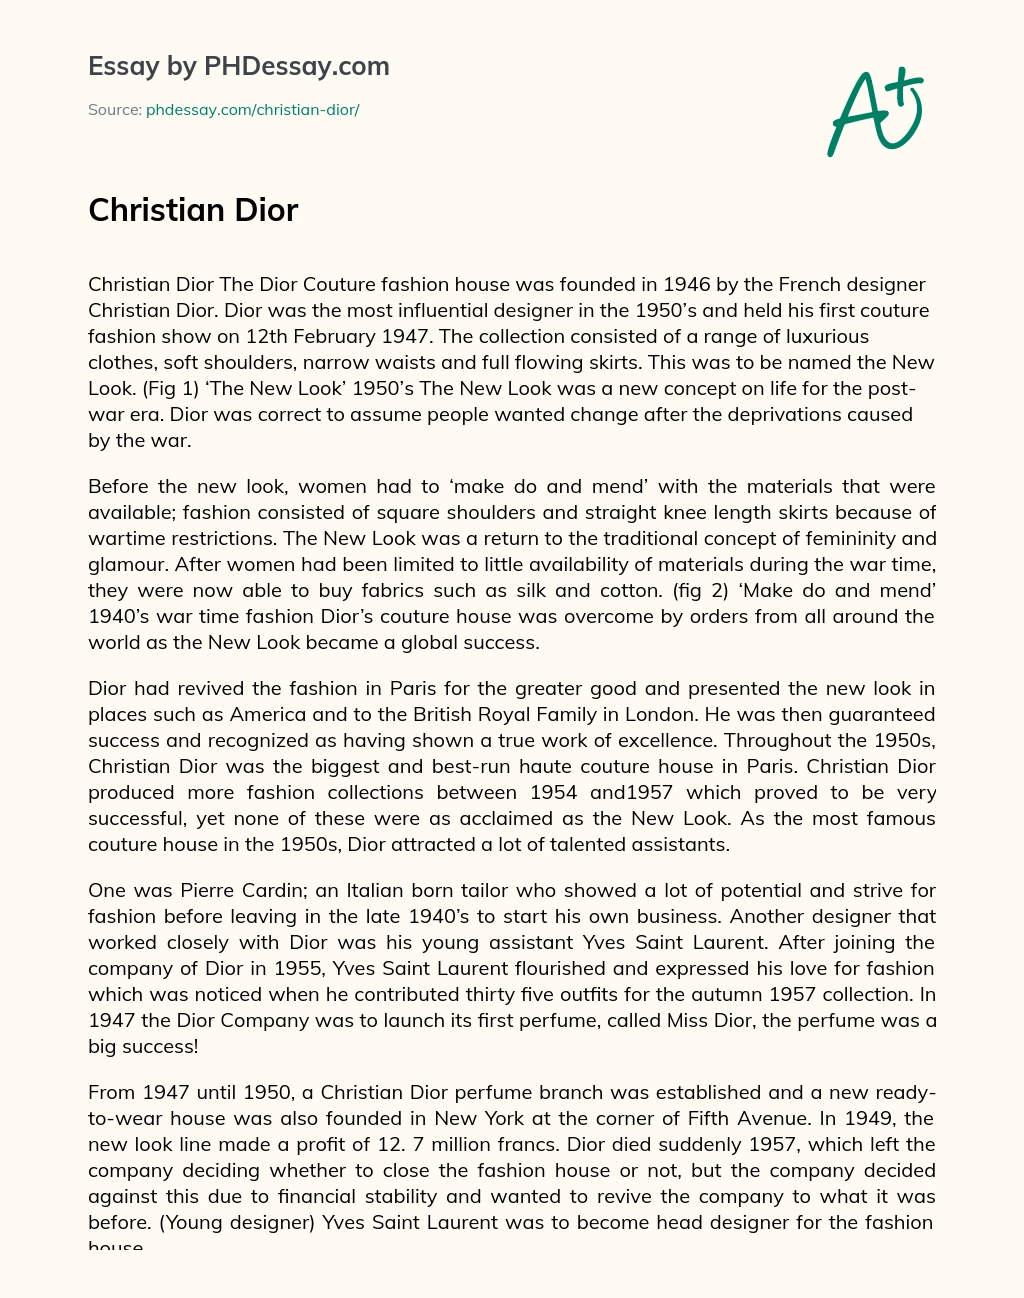 Christian Dior essay